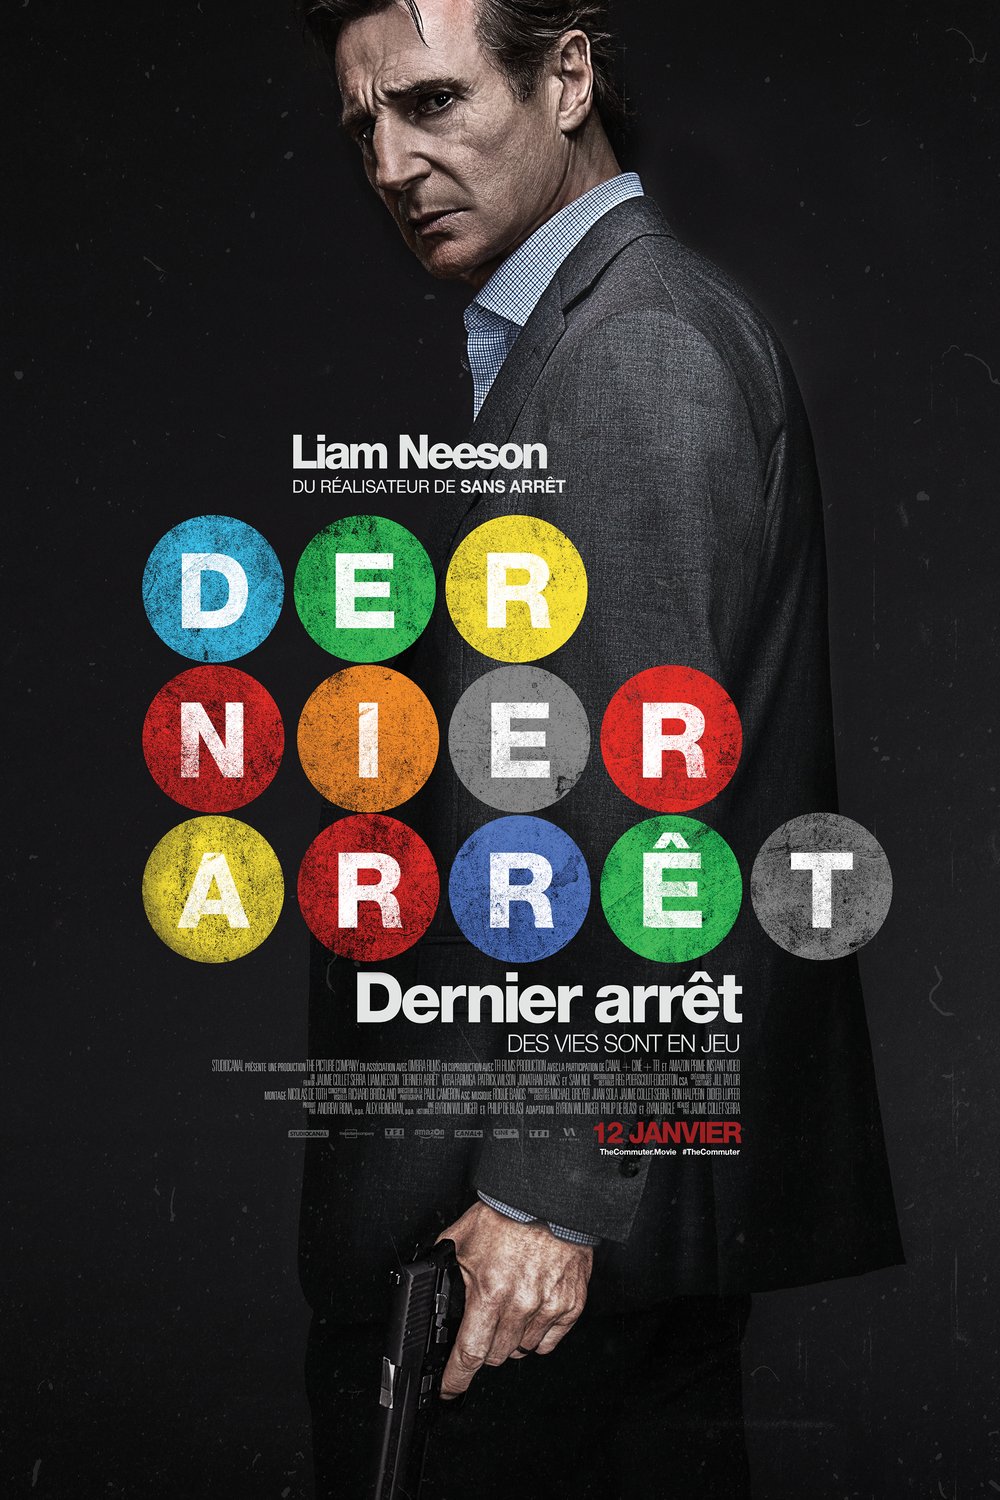 Poster of the movie Dernier arrêt